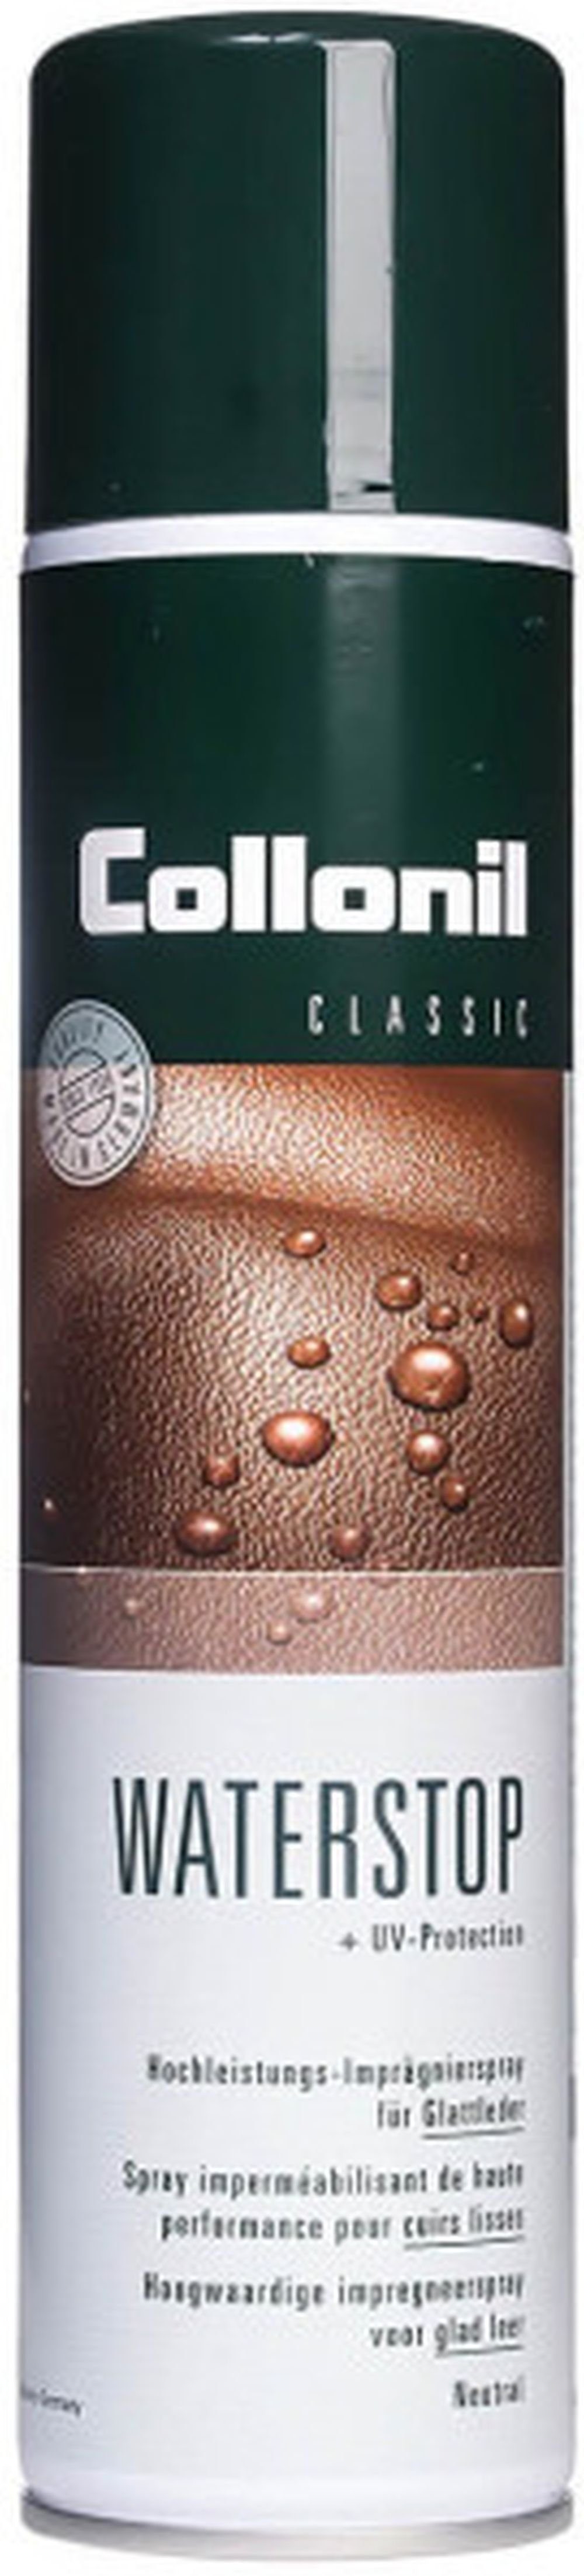 Collonil Waterstop Classic 300 ml - Imprägnierspray mit UV-Schutz Schuh-Imprägnierspray